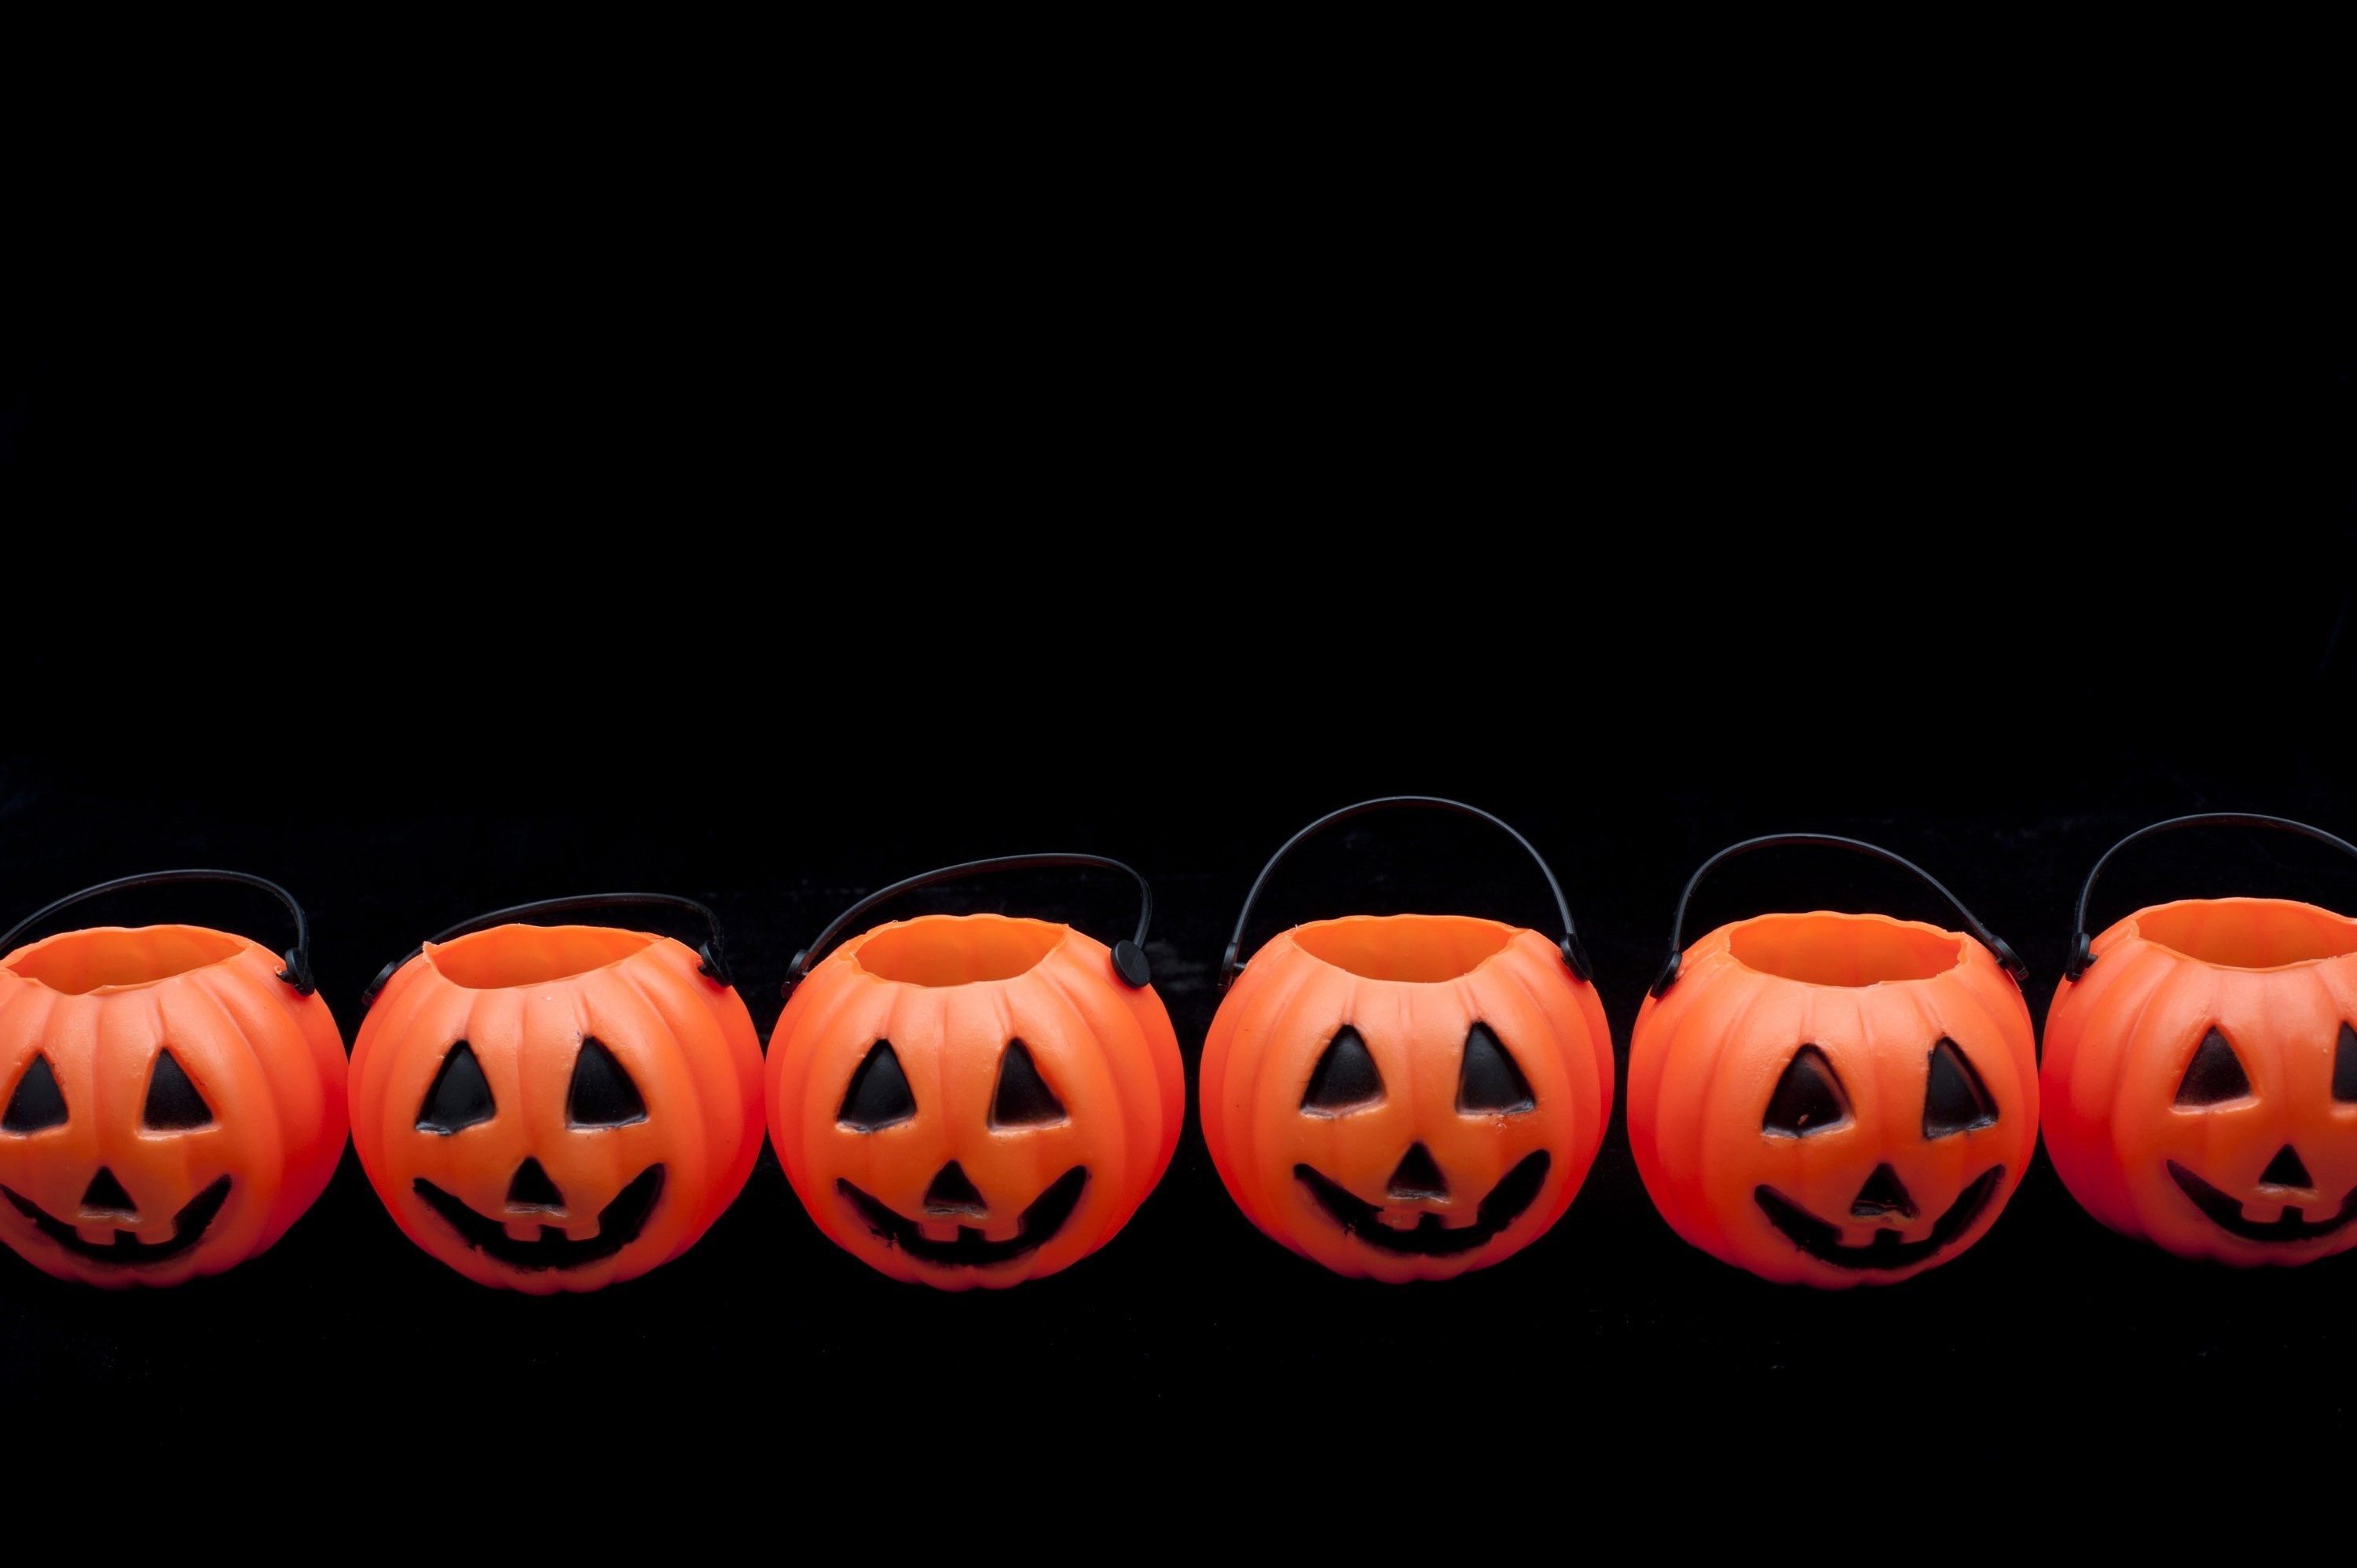 3000x1996 Row of orange ceramic Halloween pumpkin lantern ornaments on a dark  background forming a border with